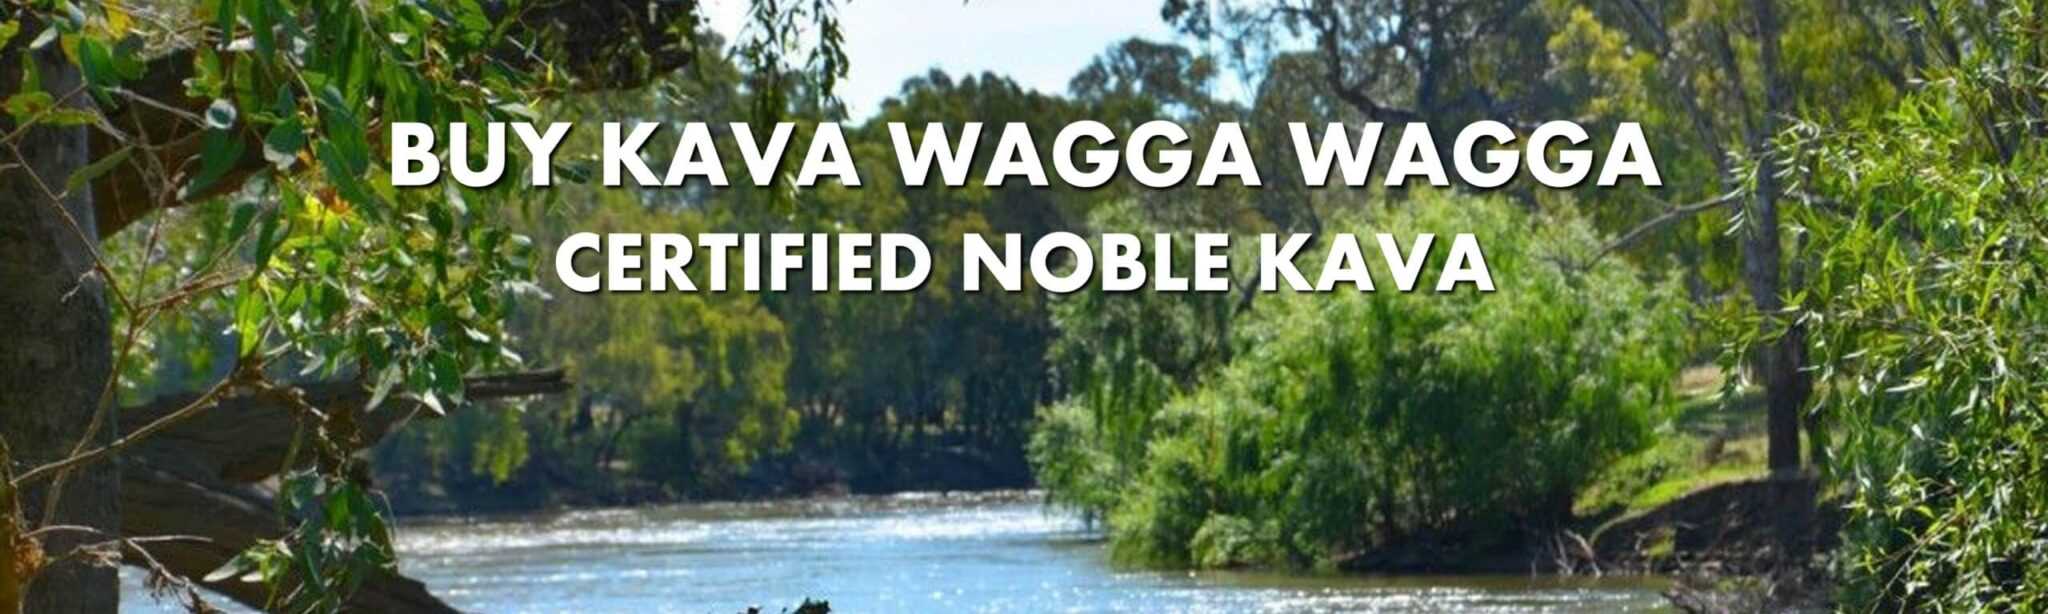 Murrumbidgee River scene near Wagga Wagga New South Wales with caption Buy Kava Wagga Wagga Certified Noble Kava